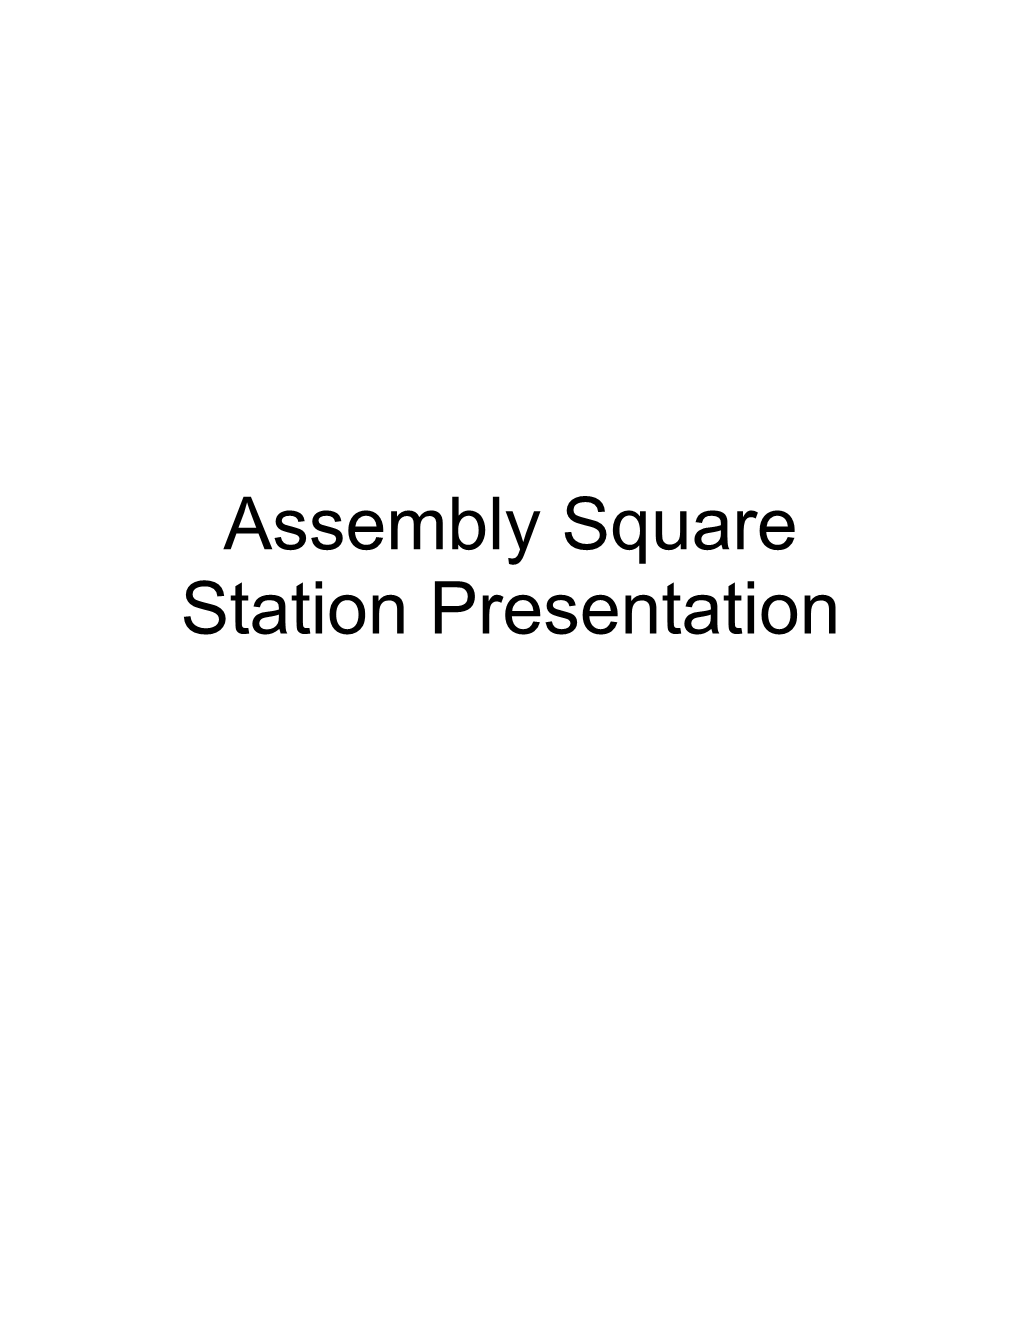 Assembly Square Station Presentationagenda